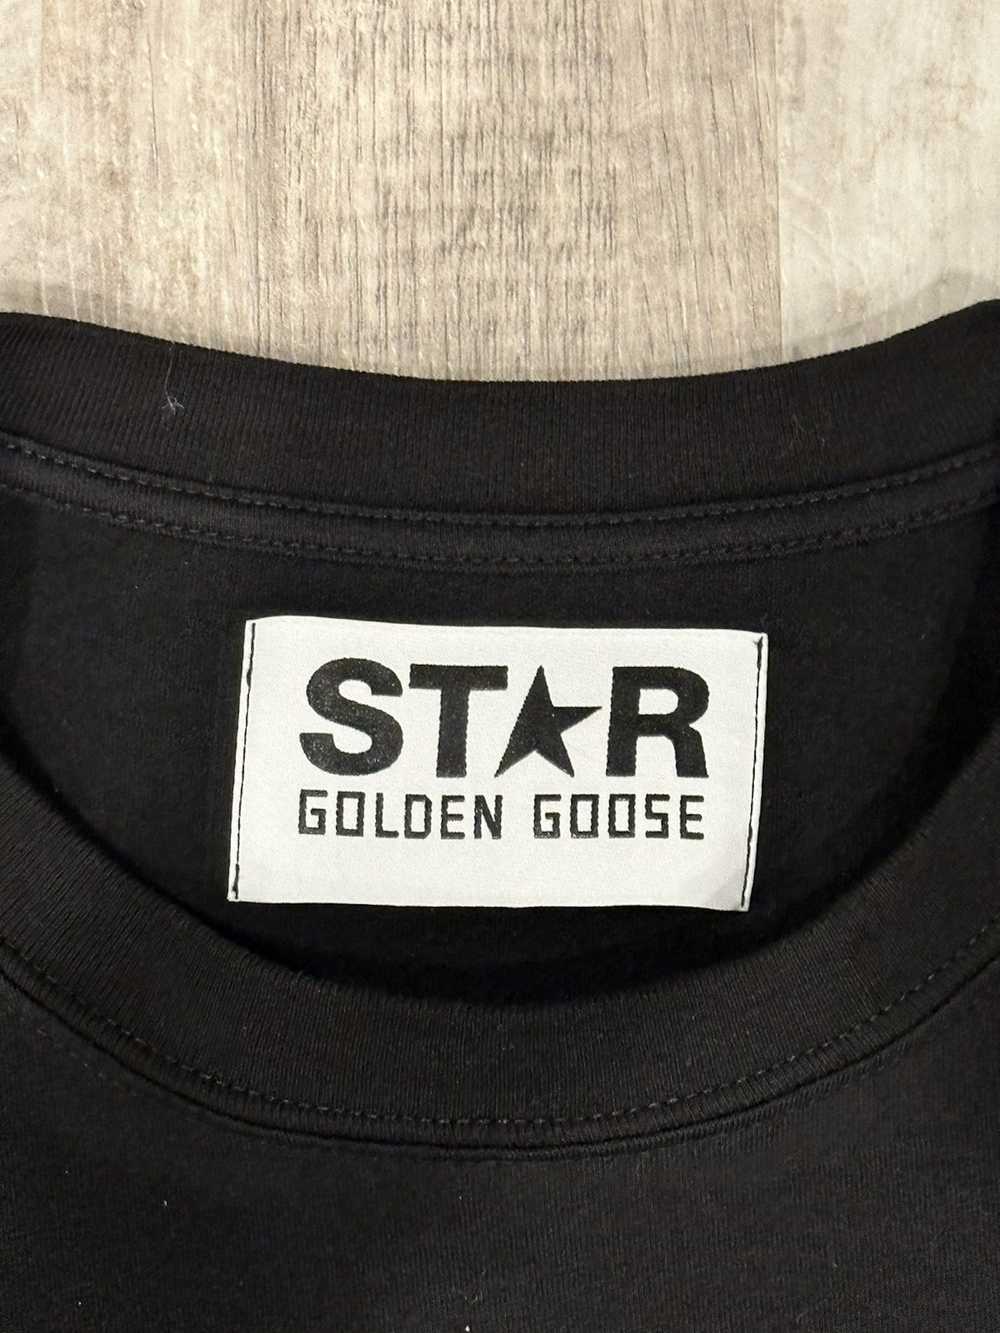 Golden Goose Golden Goose Star Collection T-Shirt - image 4